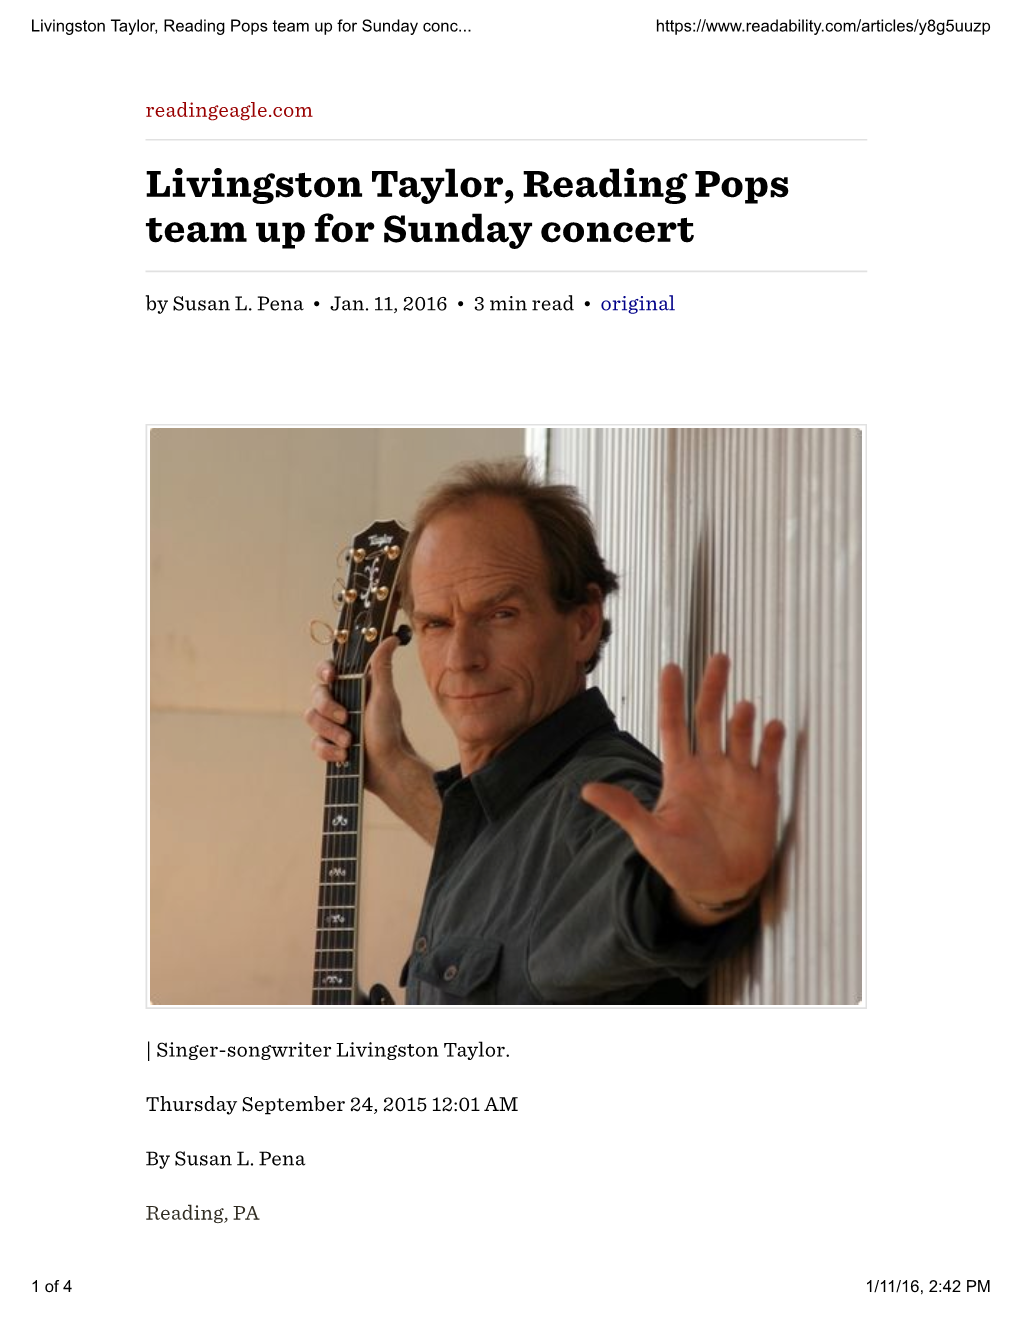 Livingston Taylor, Reading Pops Team up for Sunday Concert